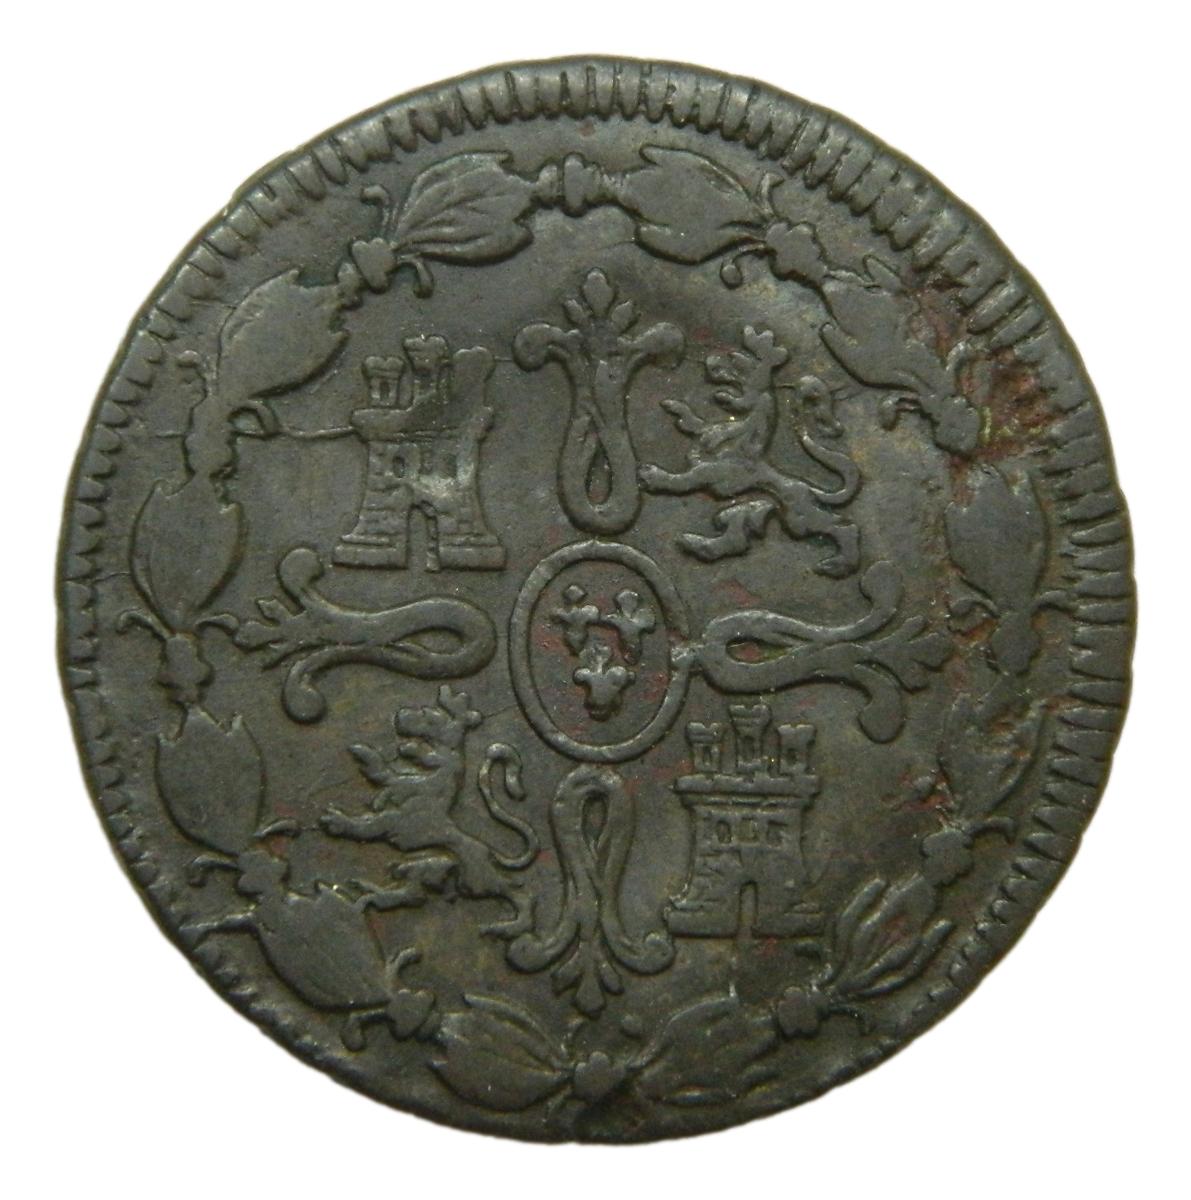 1818 - FERNANDO VII - 8 MARAVEDIS - JUBIA